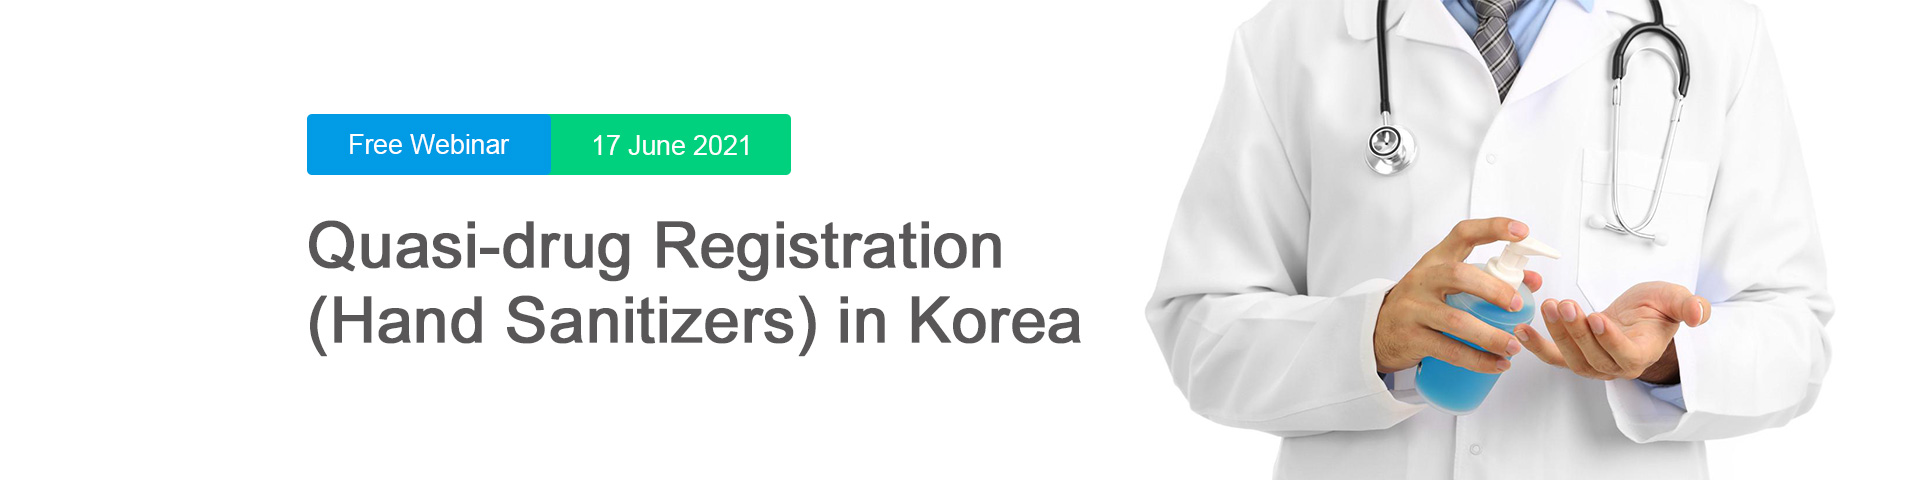 Quasi-drug,Webinar,Free,Registration,Hand,Sanitizer,Korea